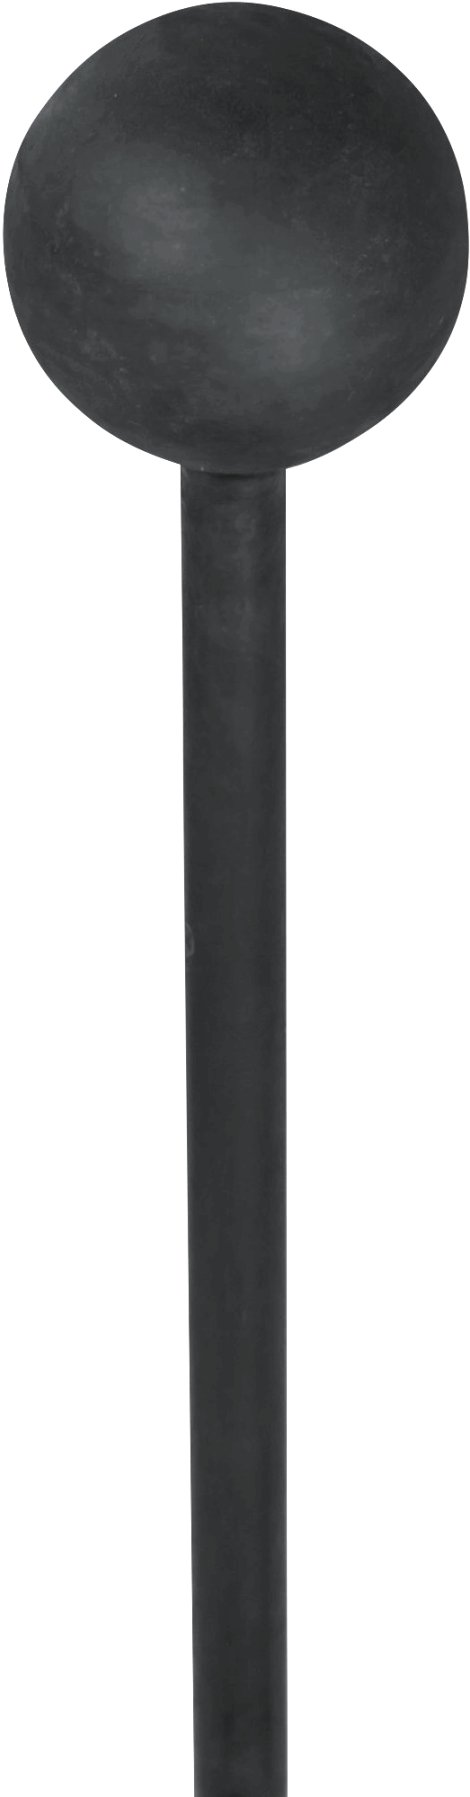 WINDHAGER Pflanzstab Kugel - gerade 2,5x90 cm, anthrazit